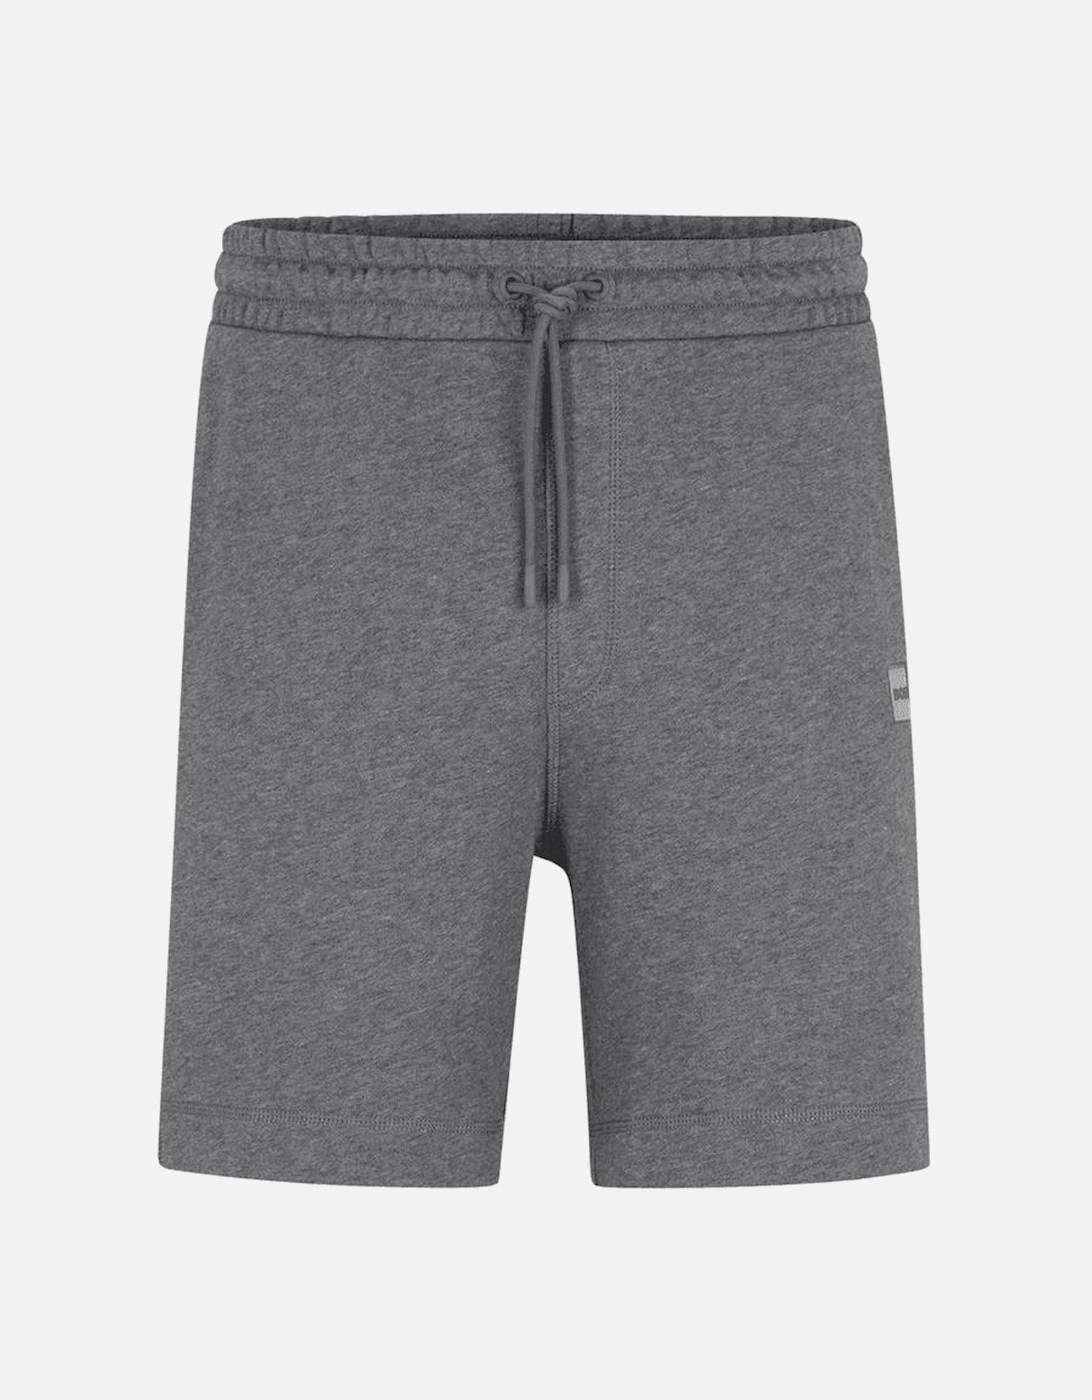 Sewalk Cotton Regular Fit Grey Shorts, 4 of 3